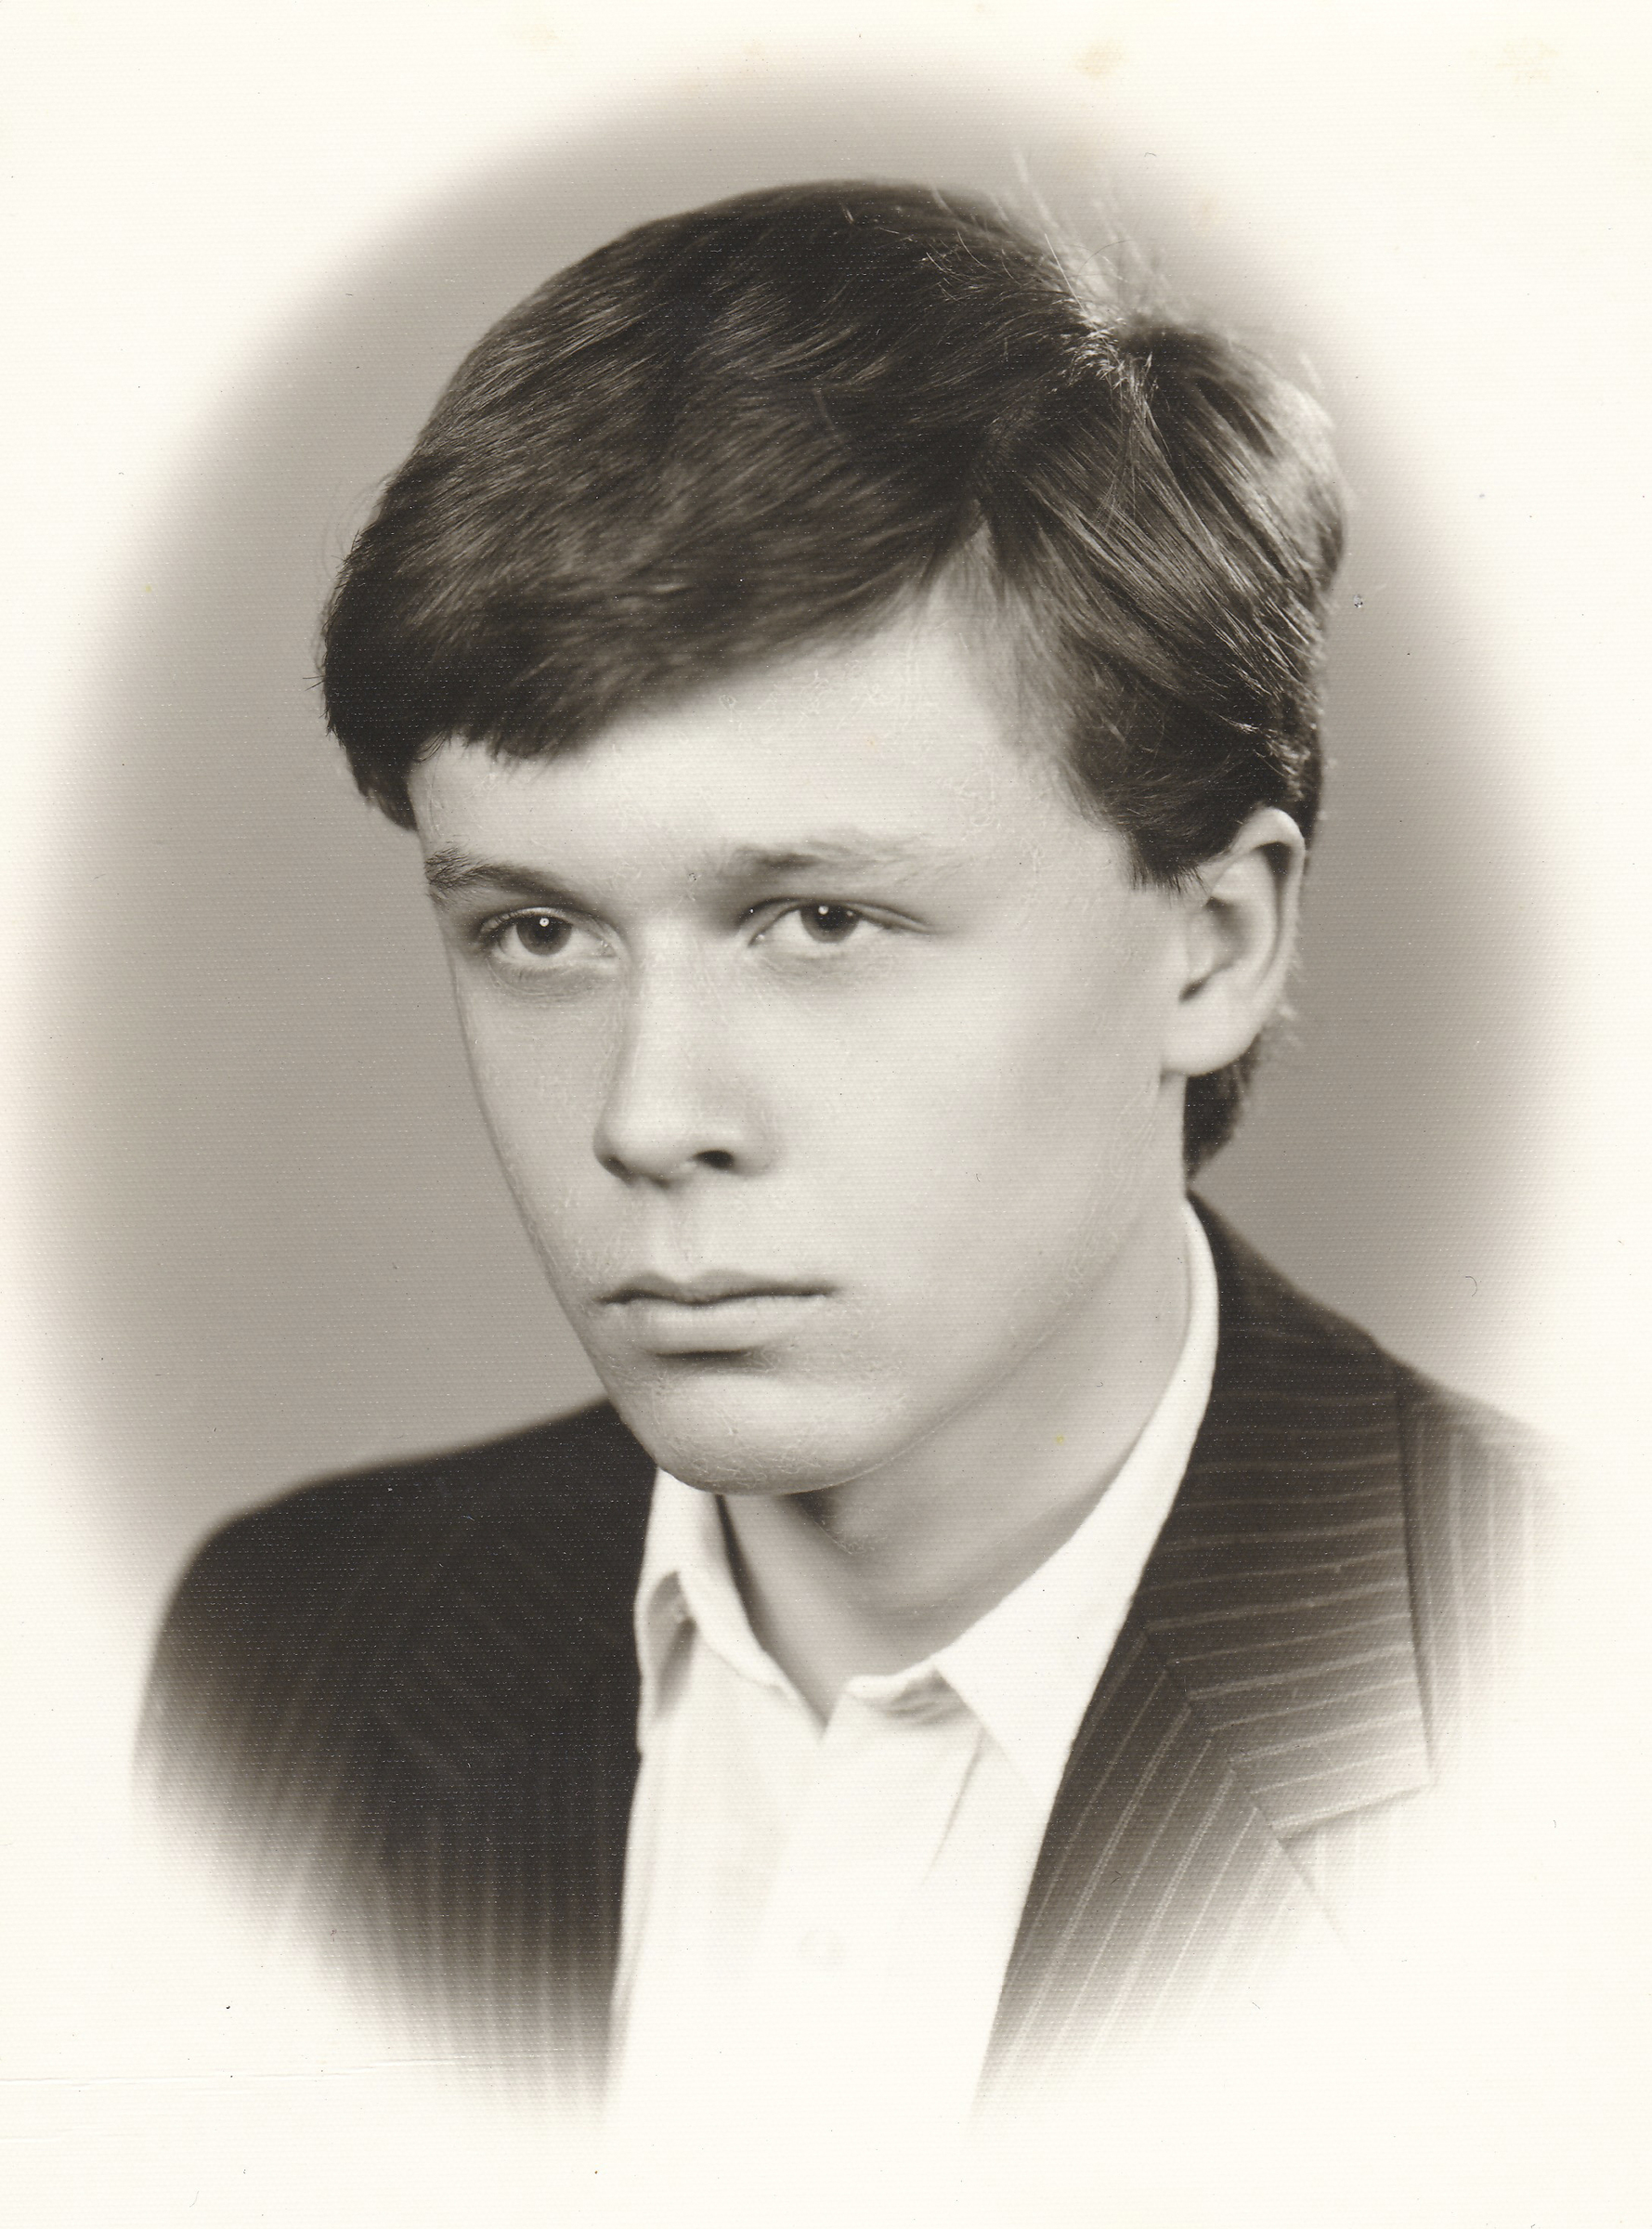 Daniel Kříž on graduation photography, 1986